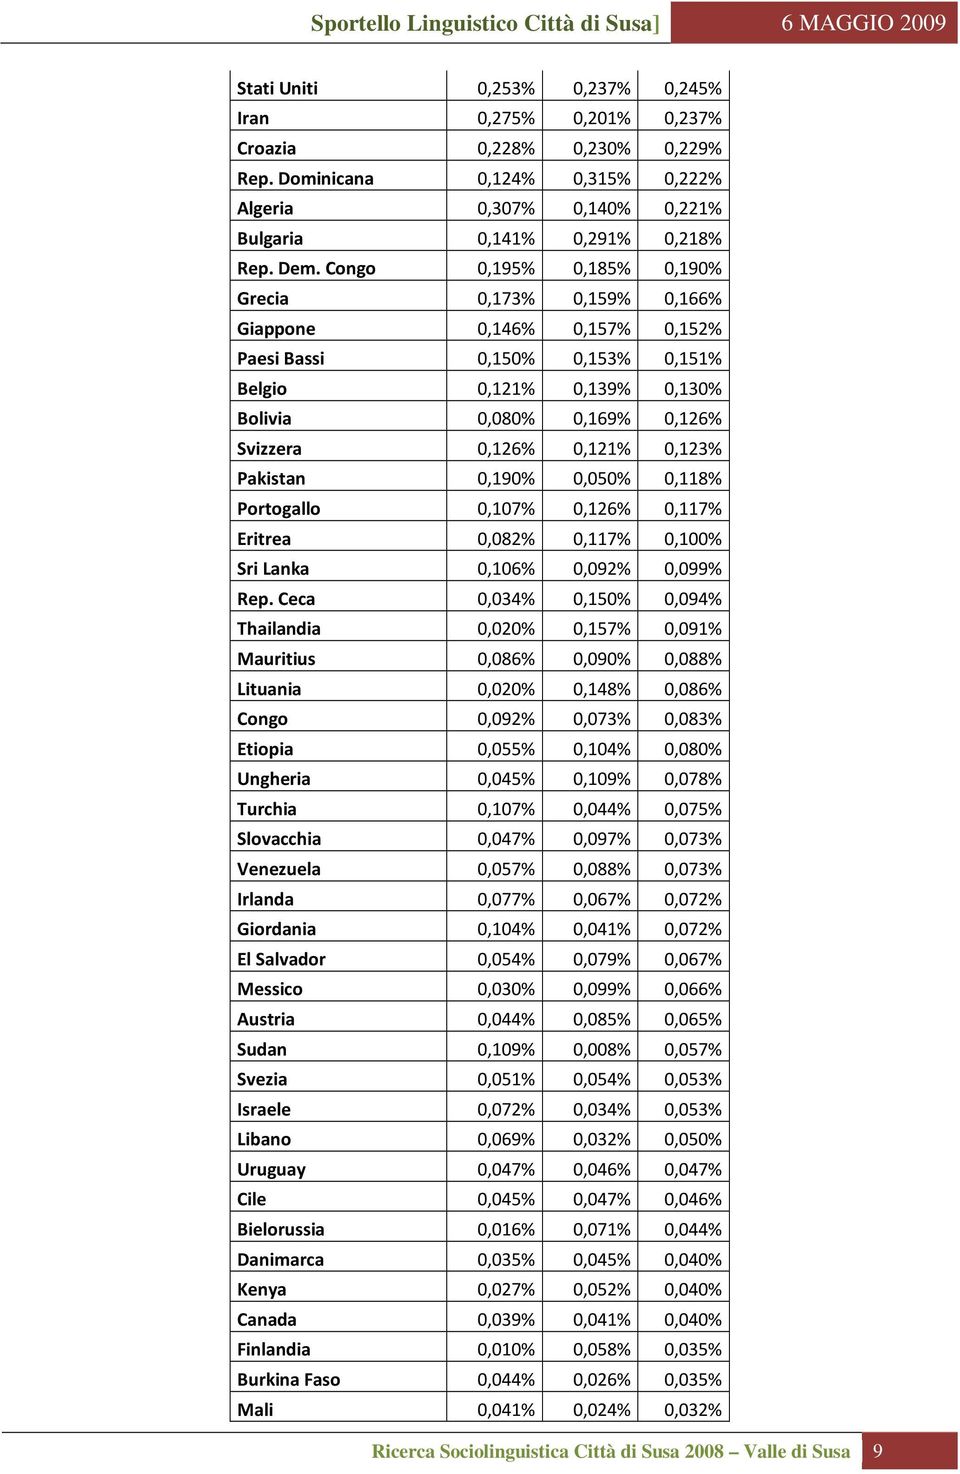 0,123% Pakistan 0,190% 0,050% 0,118% Portogallo 0,107% 0,126% 0,117% Eritrea 0,082% 0,117% 0,100% Sri Lanka 0,106% 0,092% 0,099% Rep.